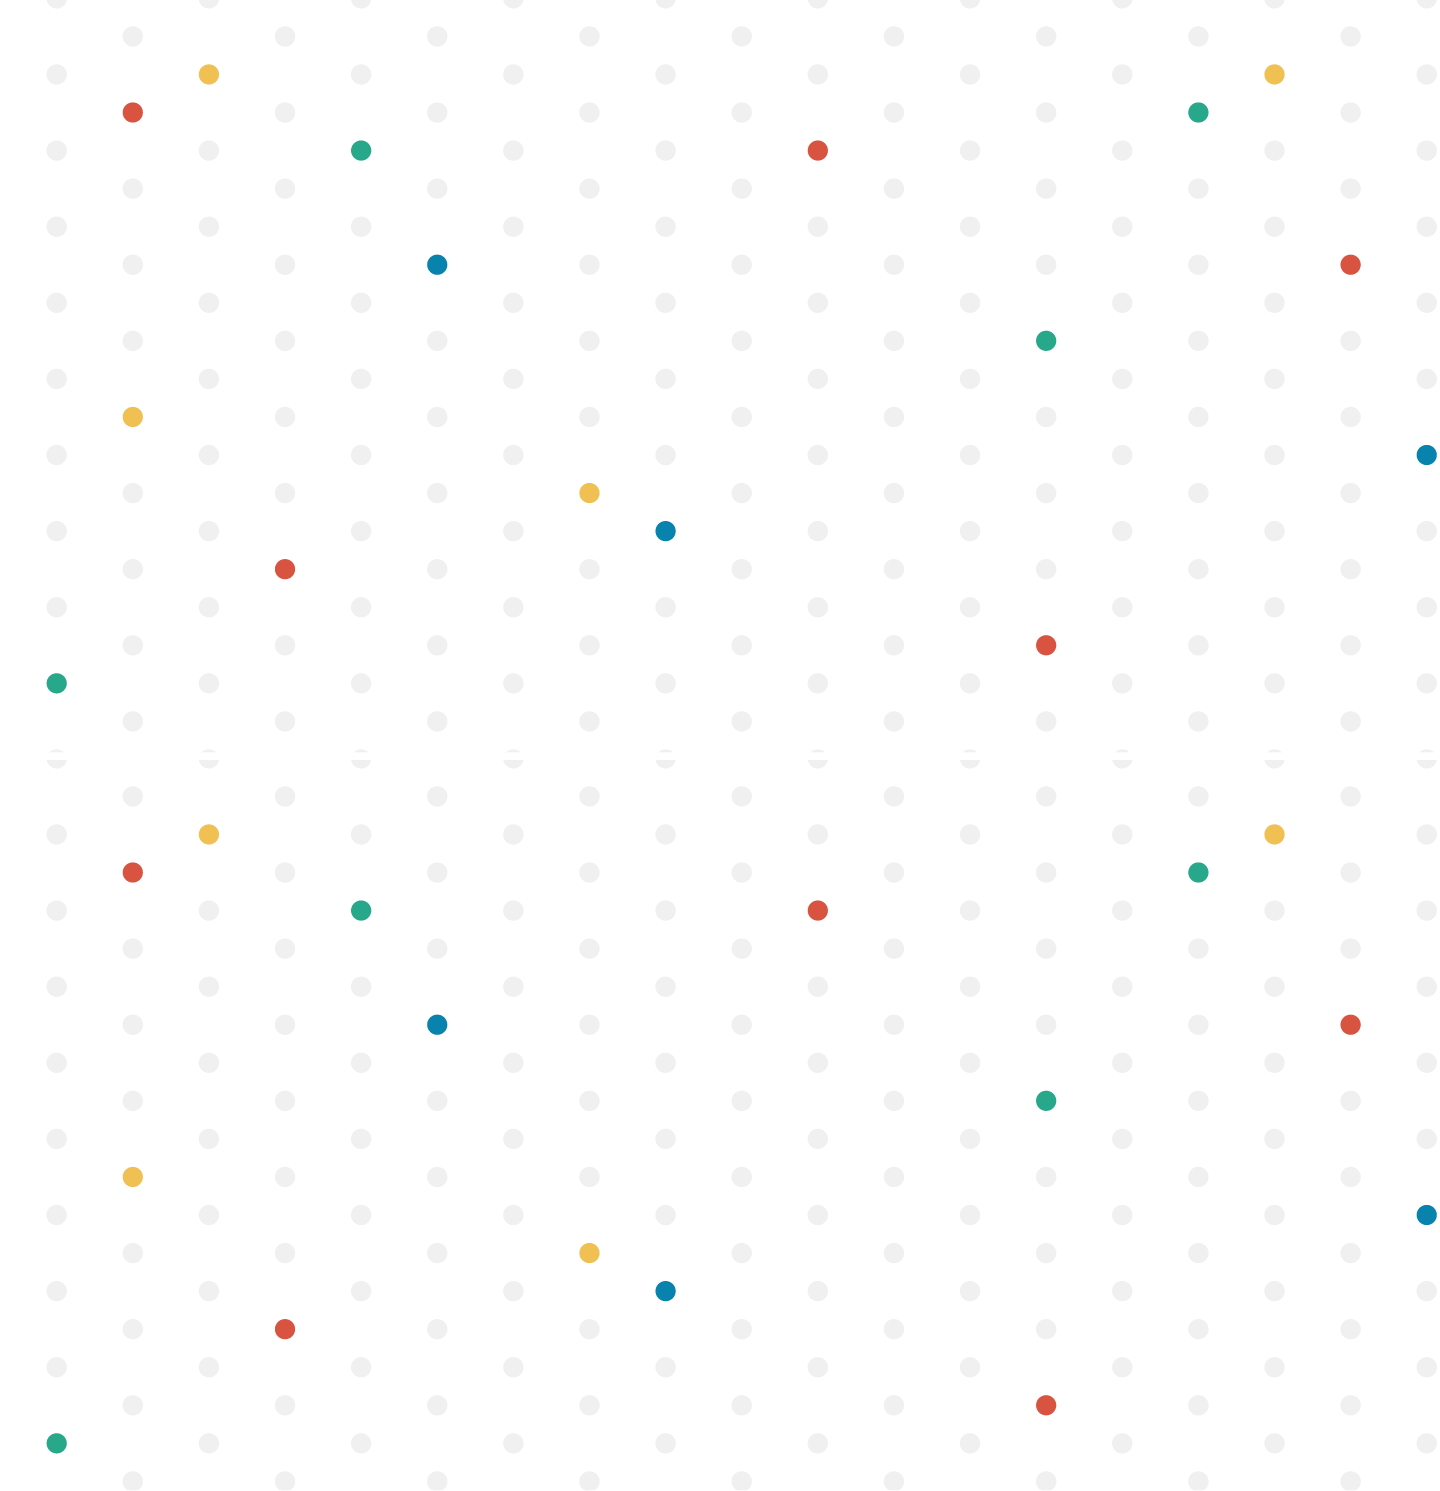 about-dot-pattern